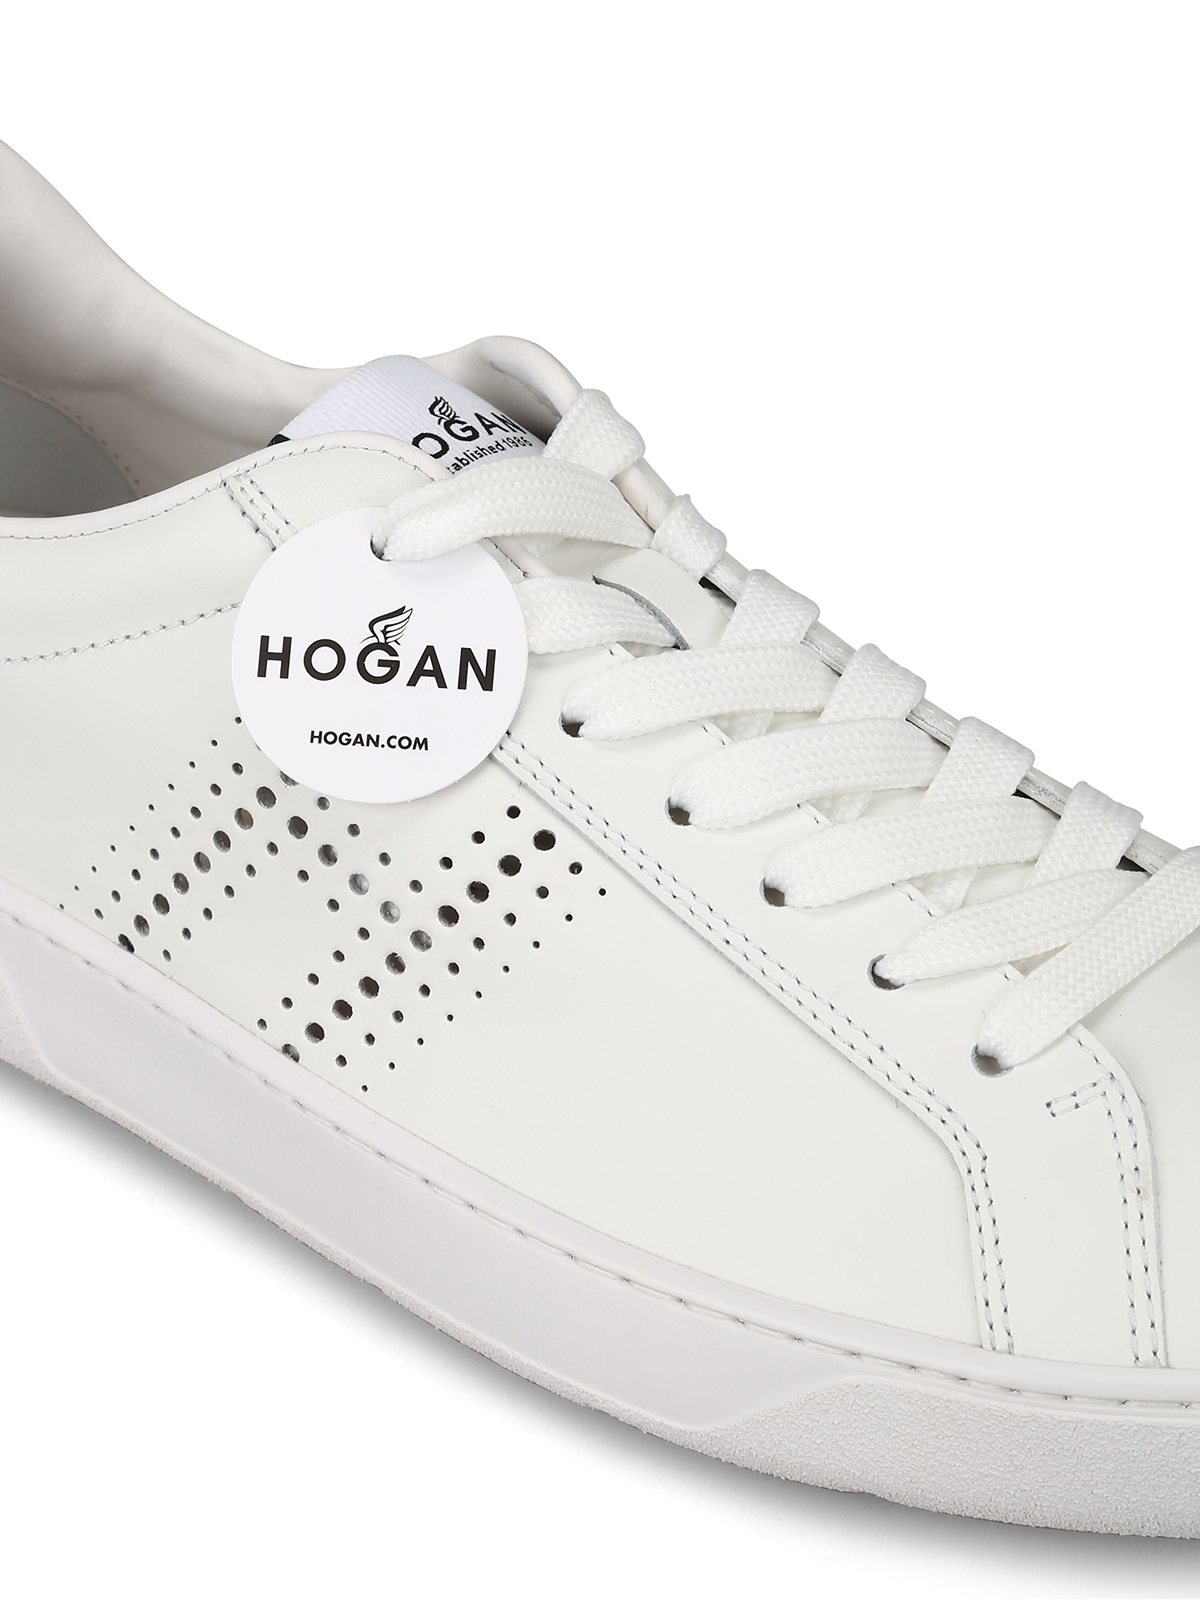 Hogan - Sneaker H327 bianche in pelle H forata - sneakers -  HXM3270BT10JBF1353